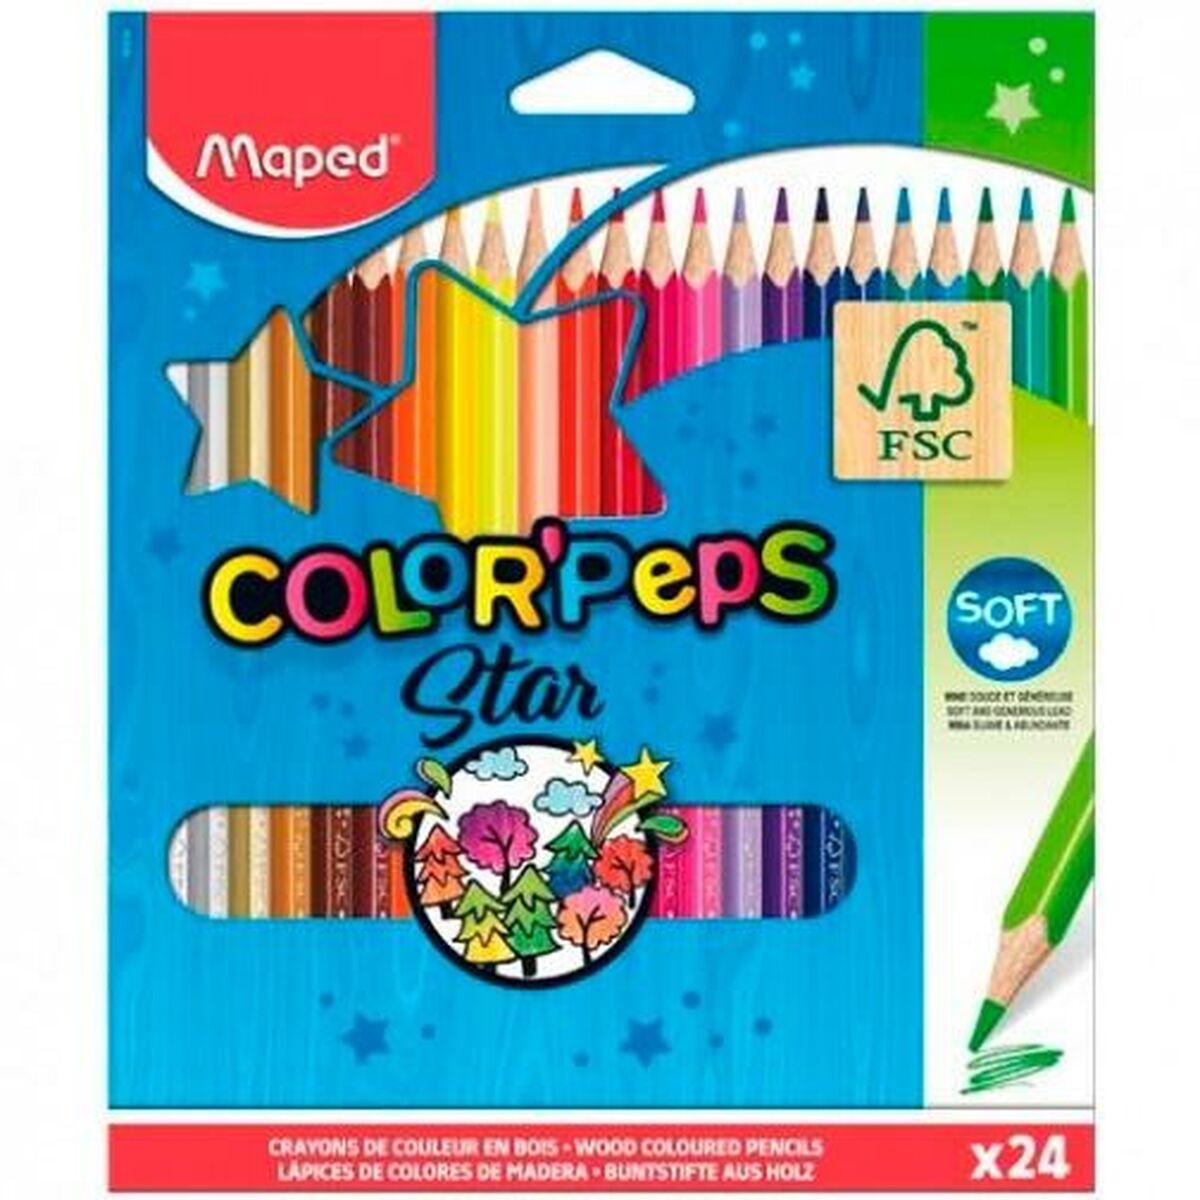 Colouring pencils Maped Color' Peps Star Multicolour 24 Pieces (12 Units)